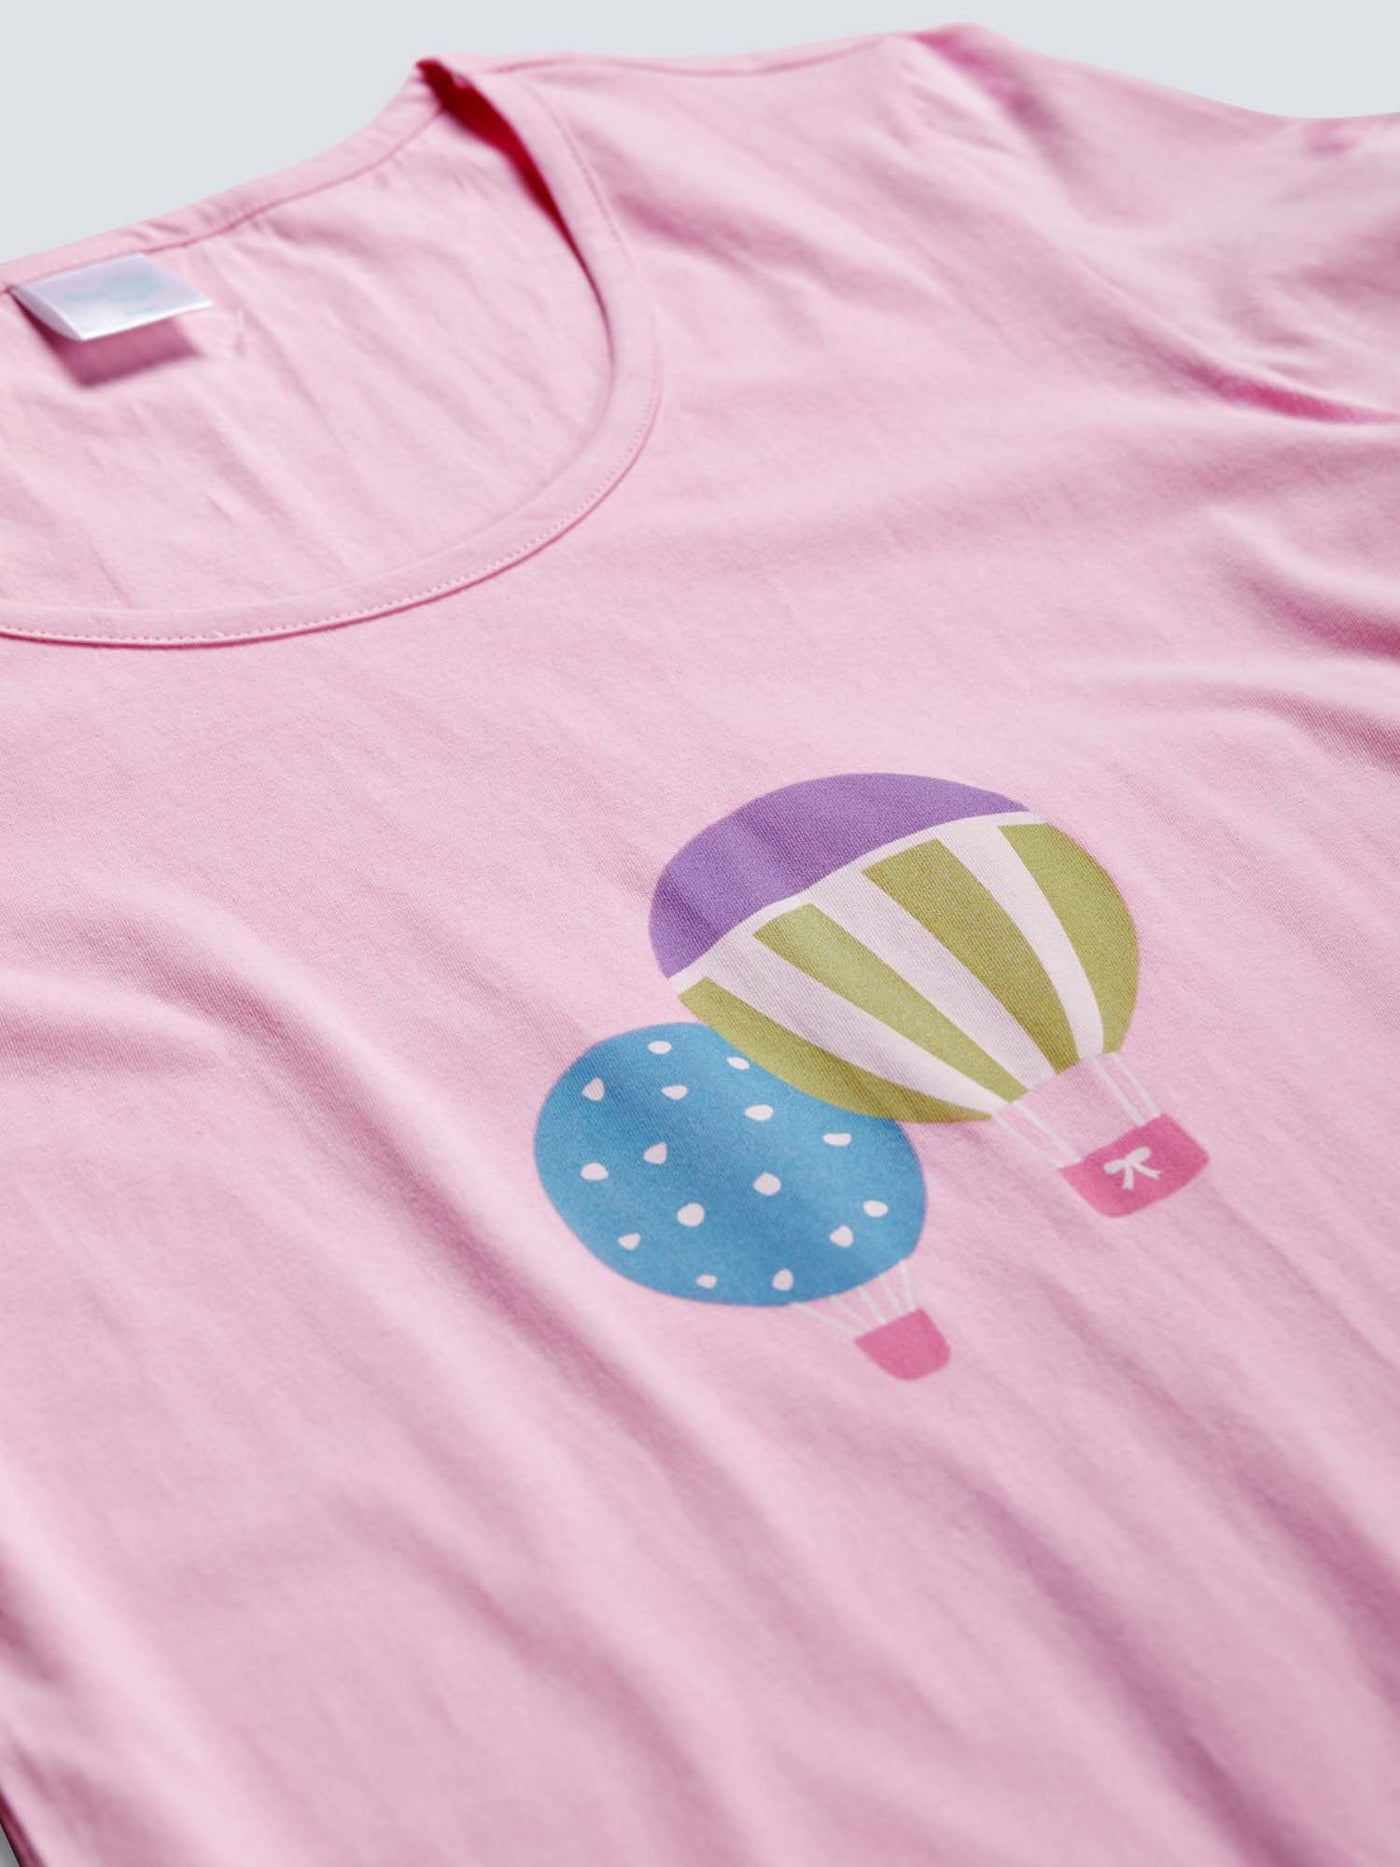 Pastel Balloon Women's T-Shirt PJ Set